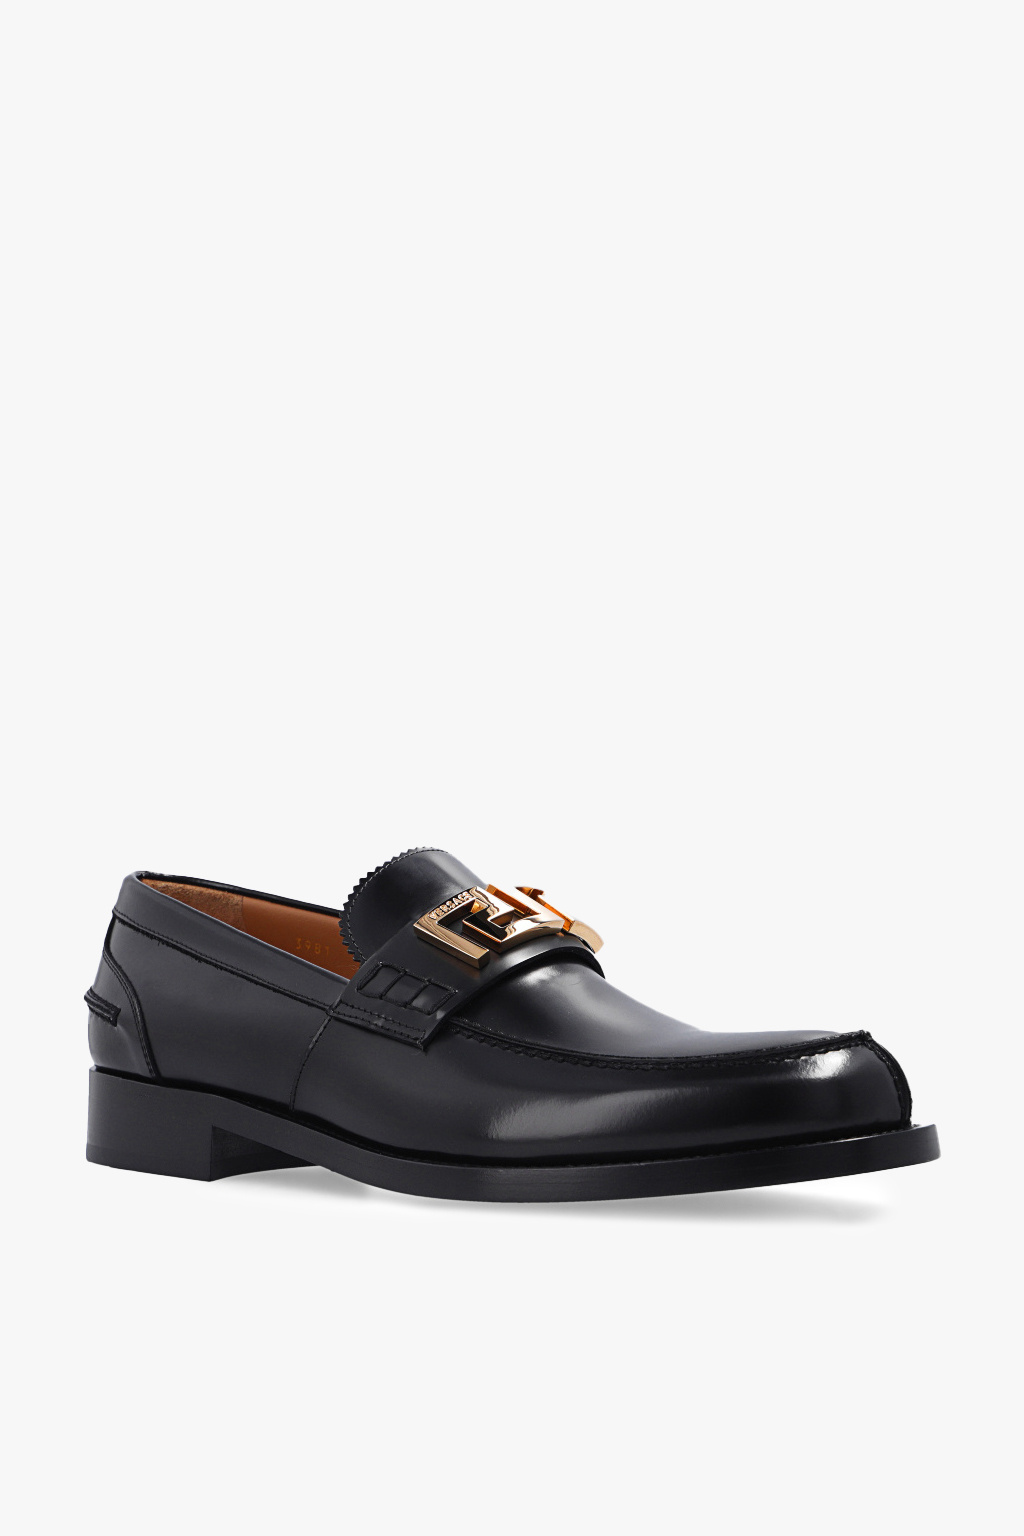 Ermenegildo Zegna, Shoes, Ermenegildo Zegna Designer Us 8 Eu 7 Mens Black  Loafers Hardware Buckle Like New